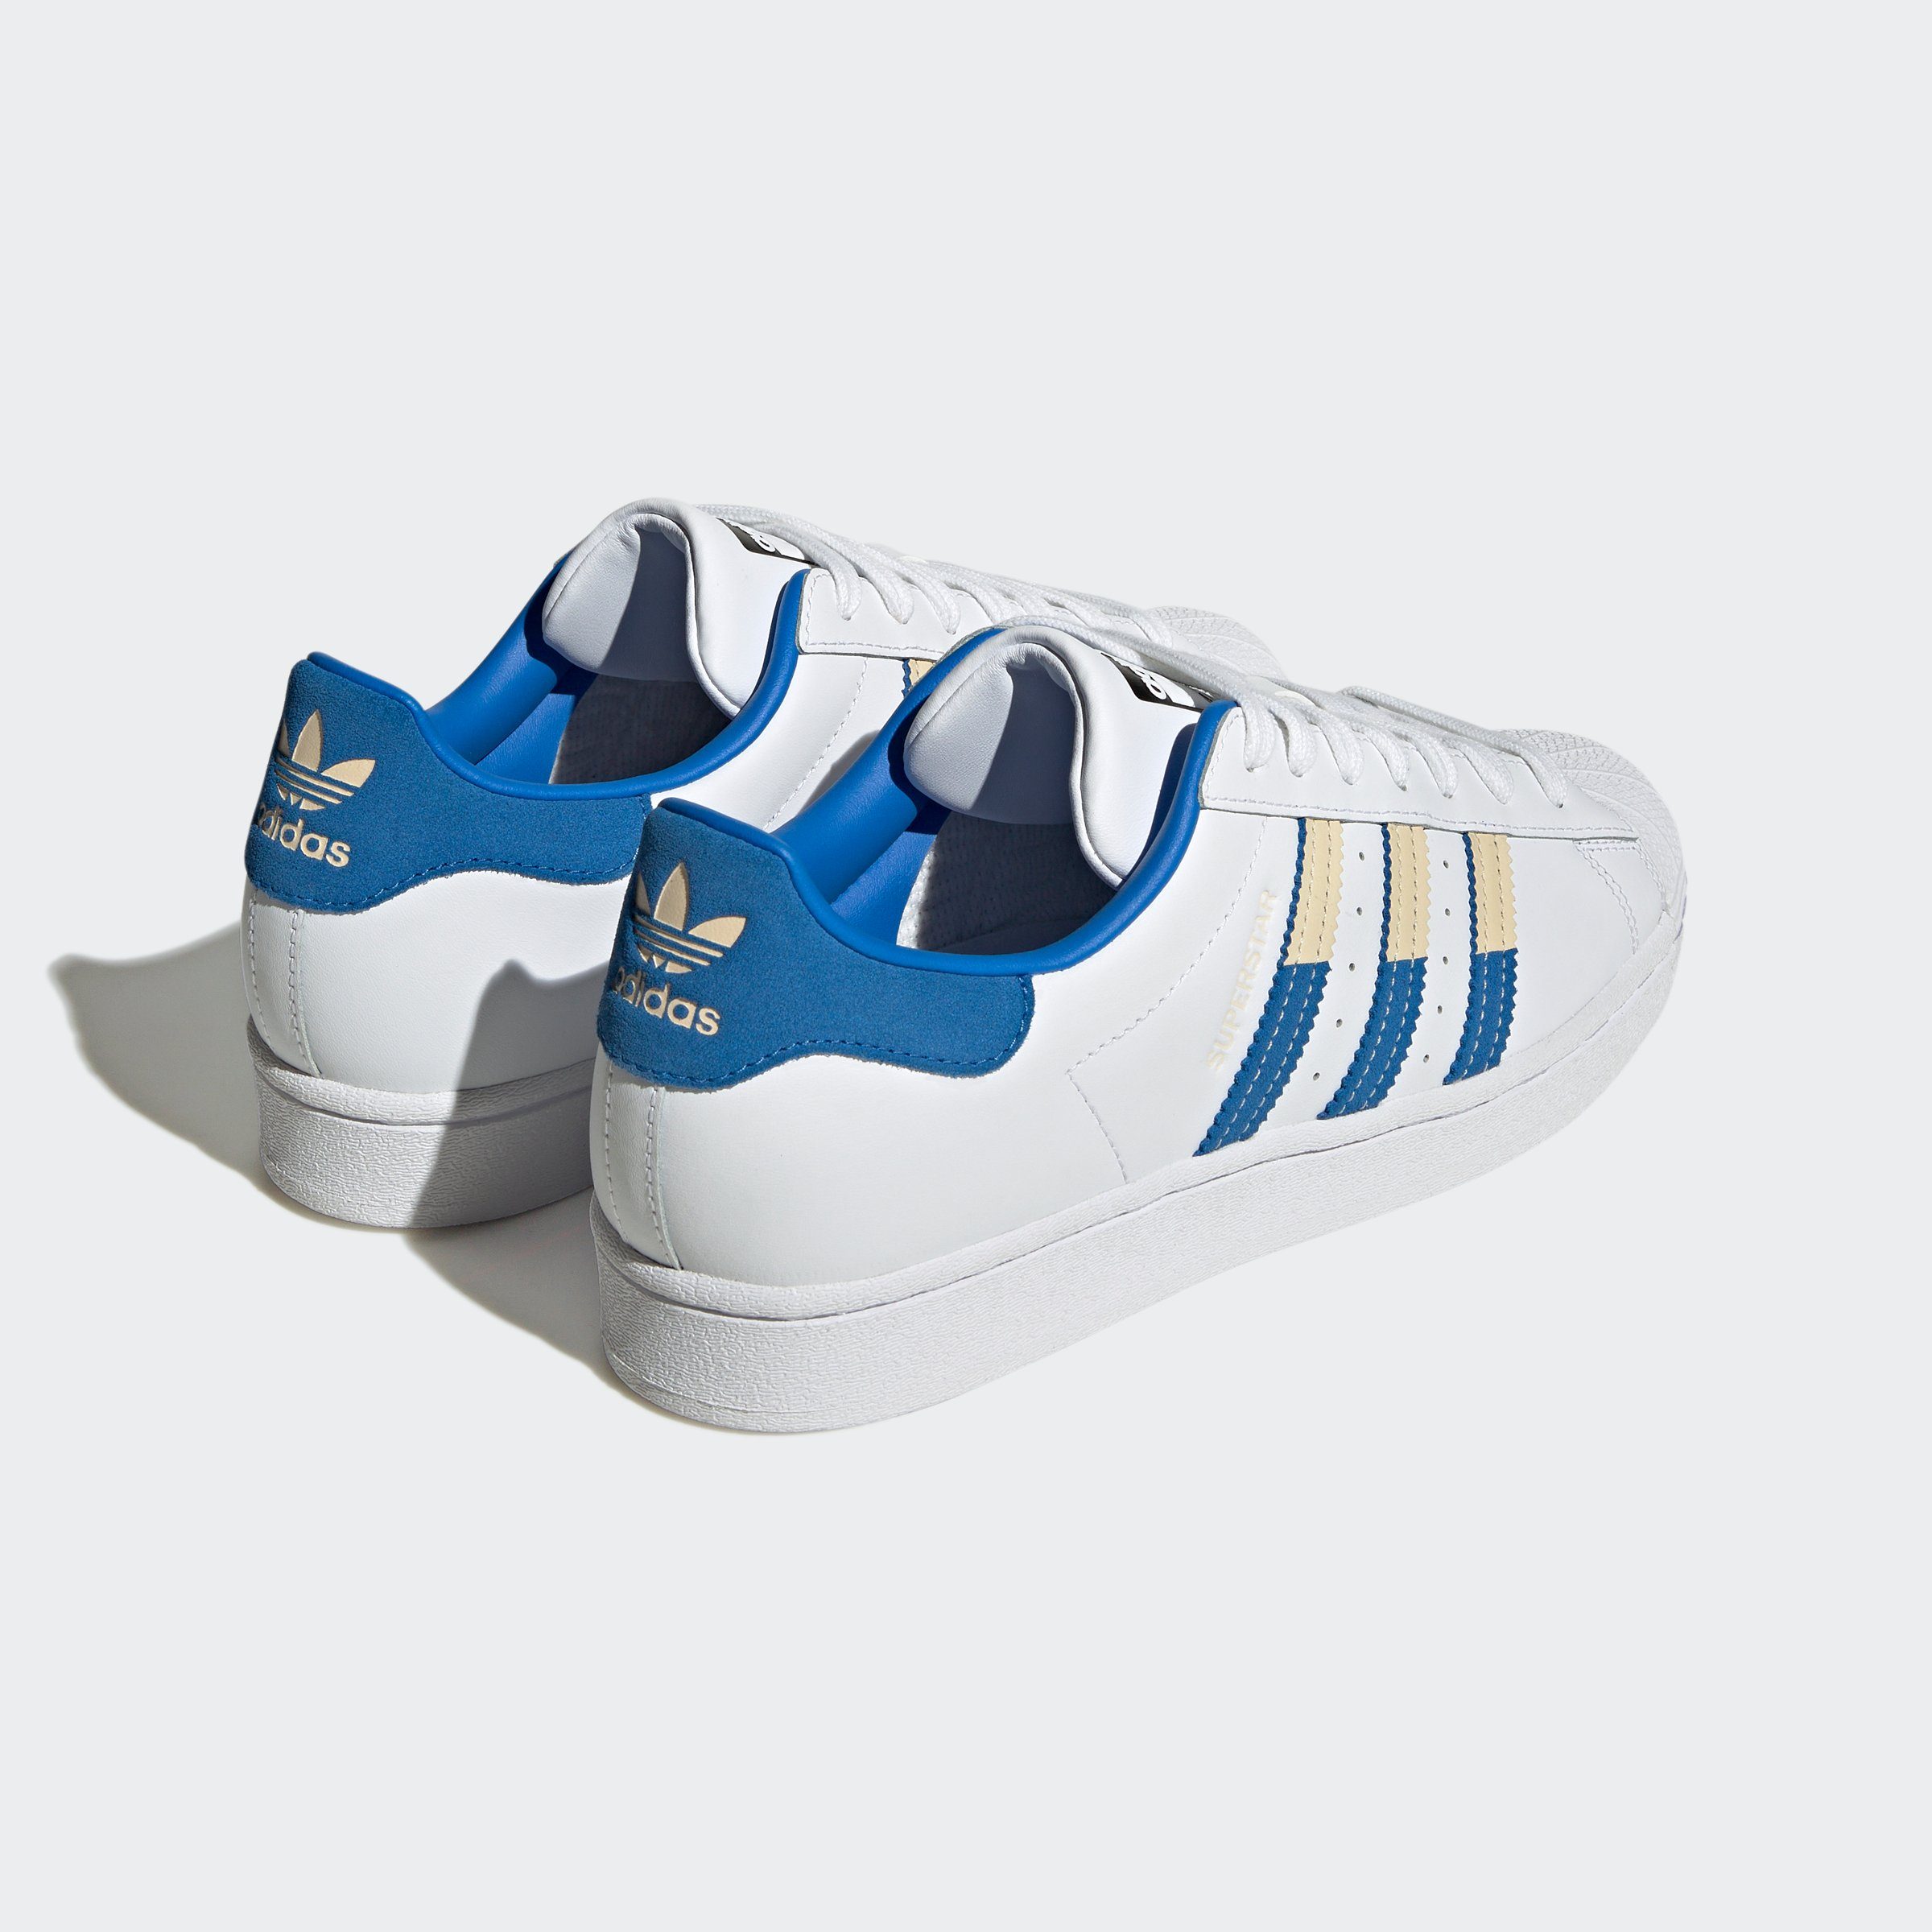 Strata Royal Sneaker White Cloud adidas / SUPERSTAR Sand Originals / Bright